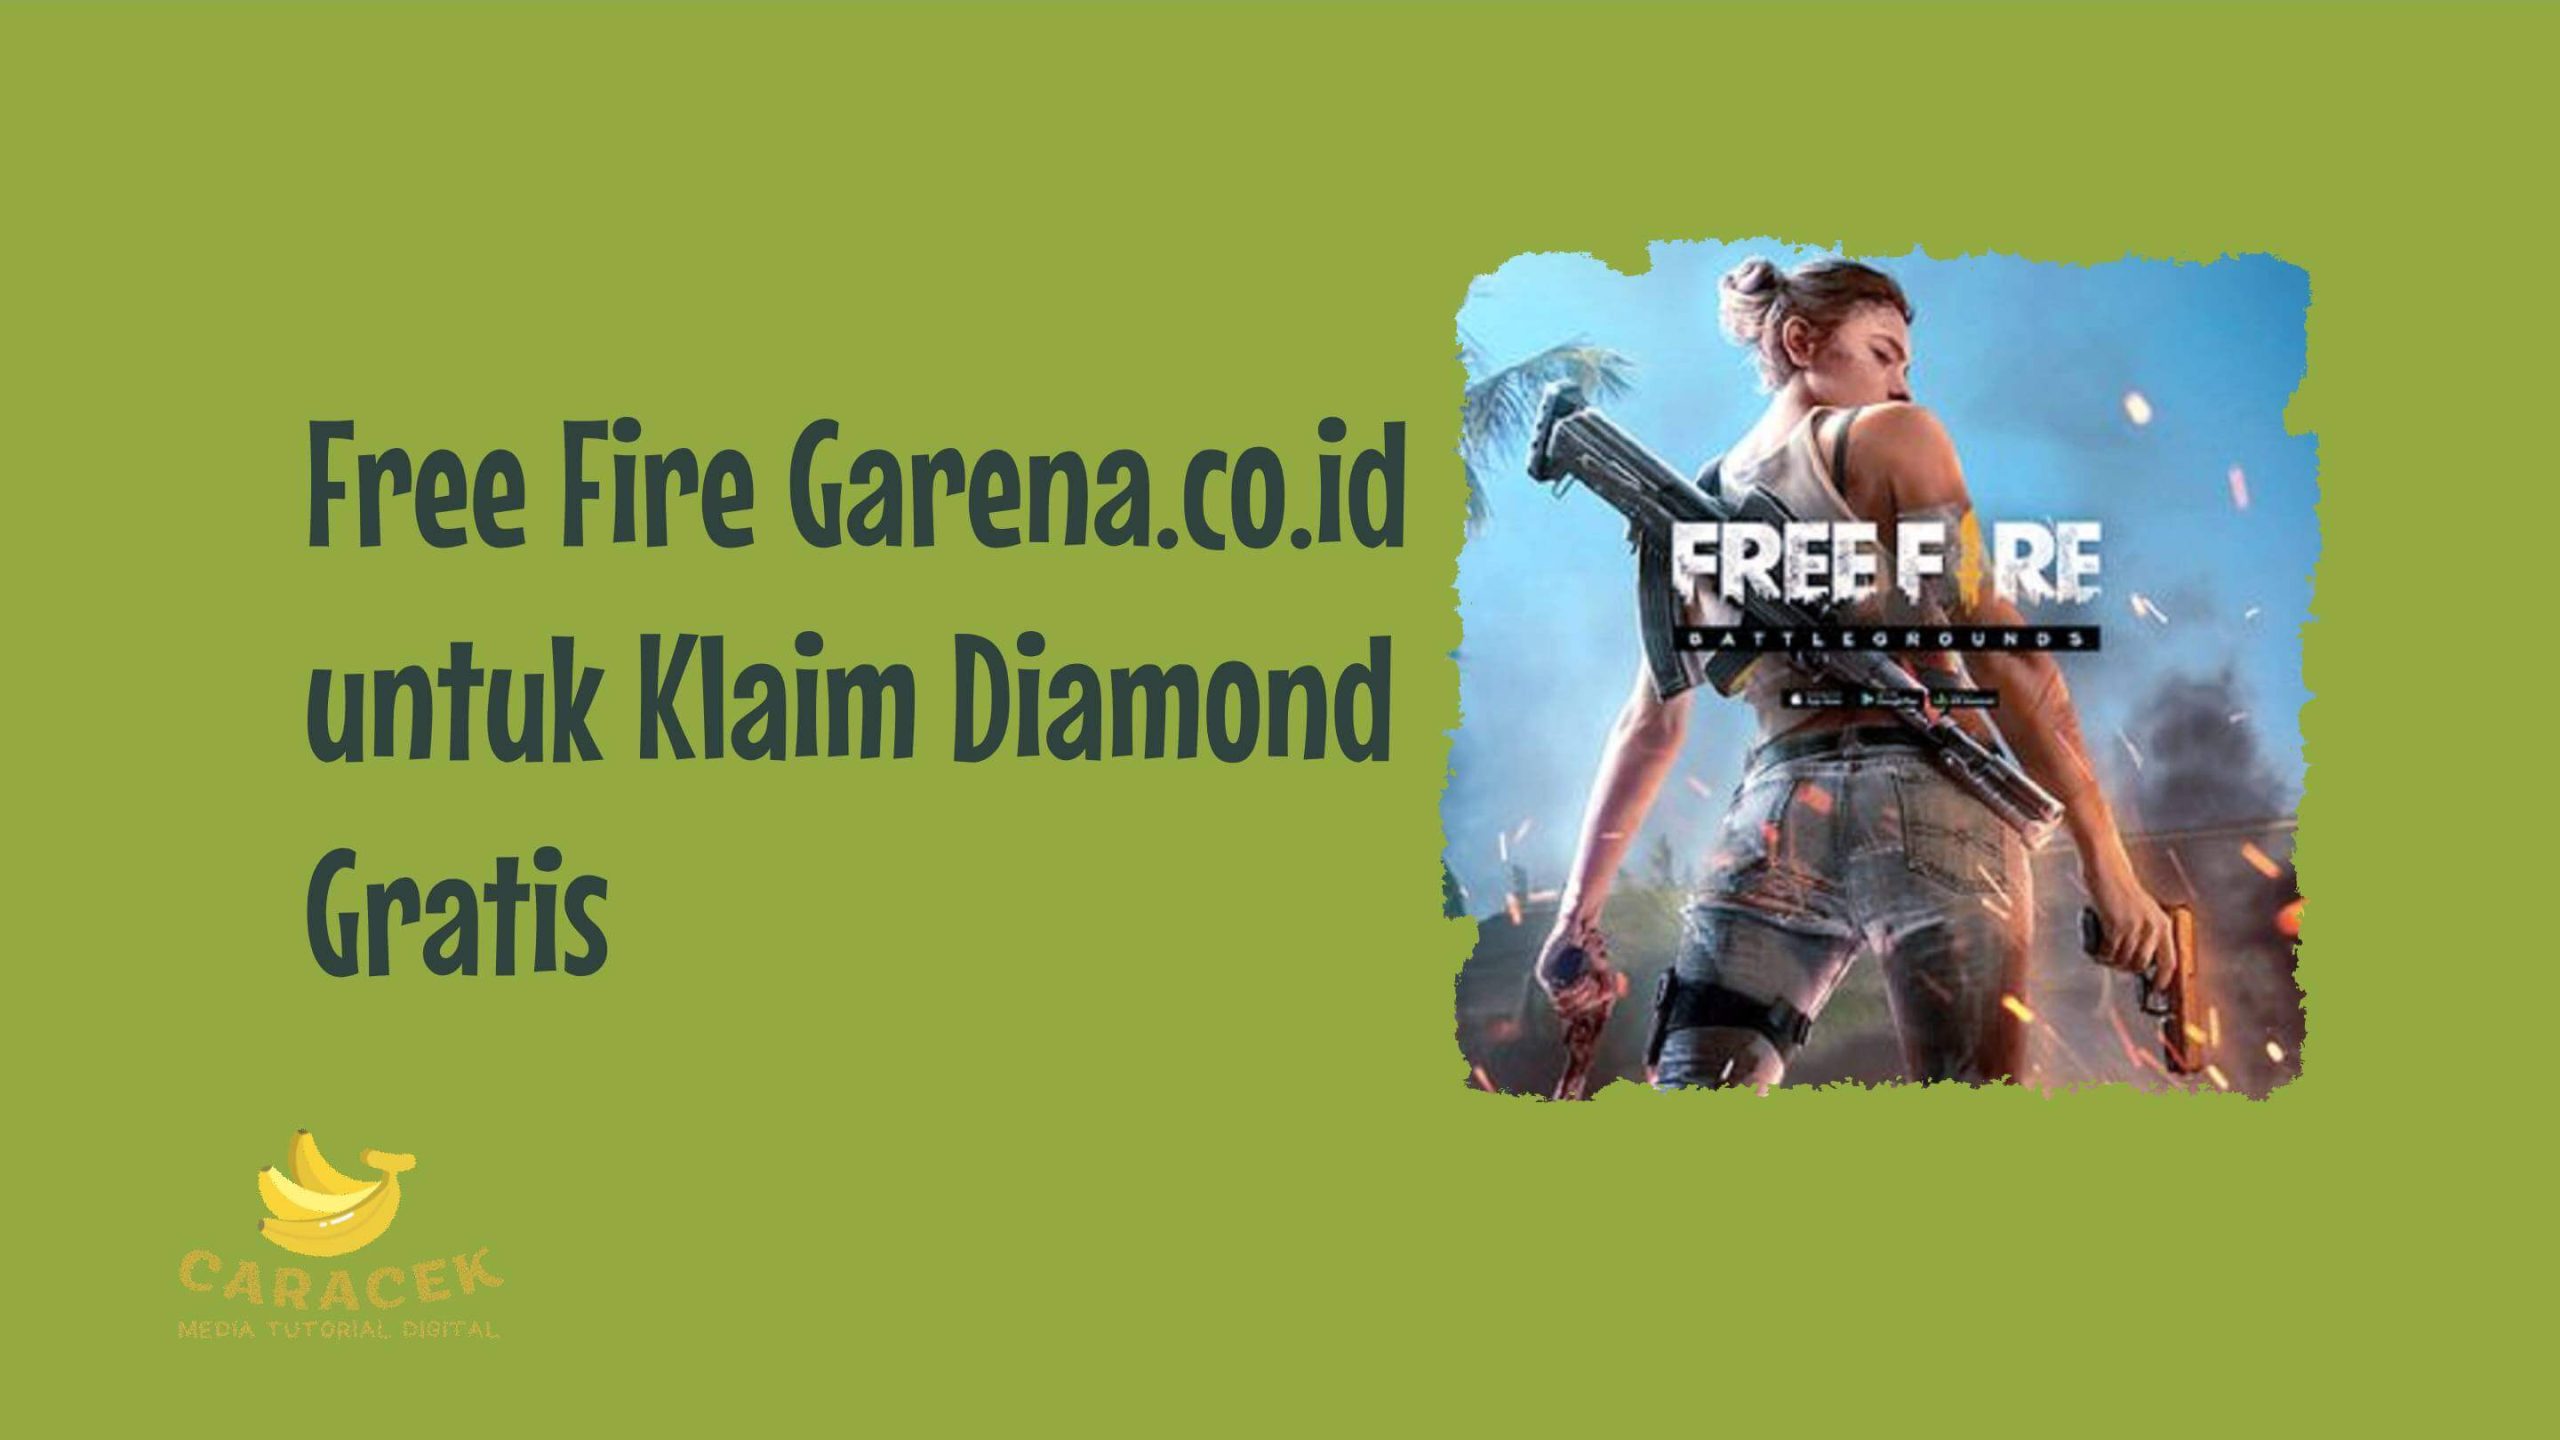 Free Fire Garena.co.id